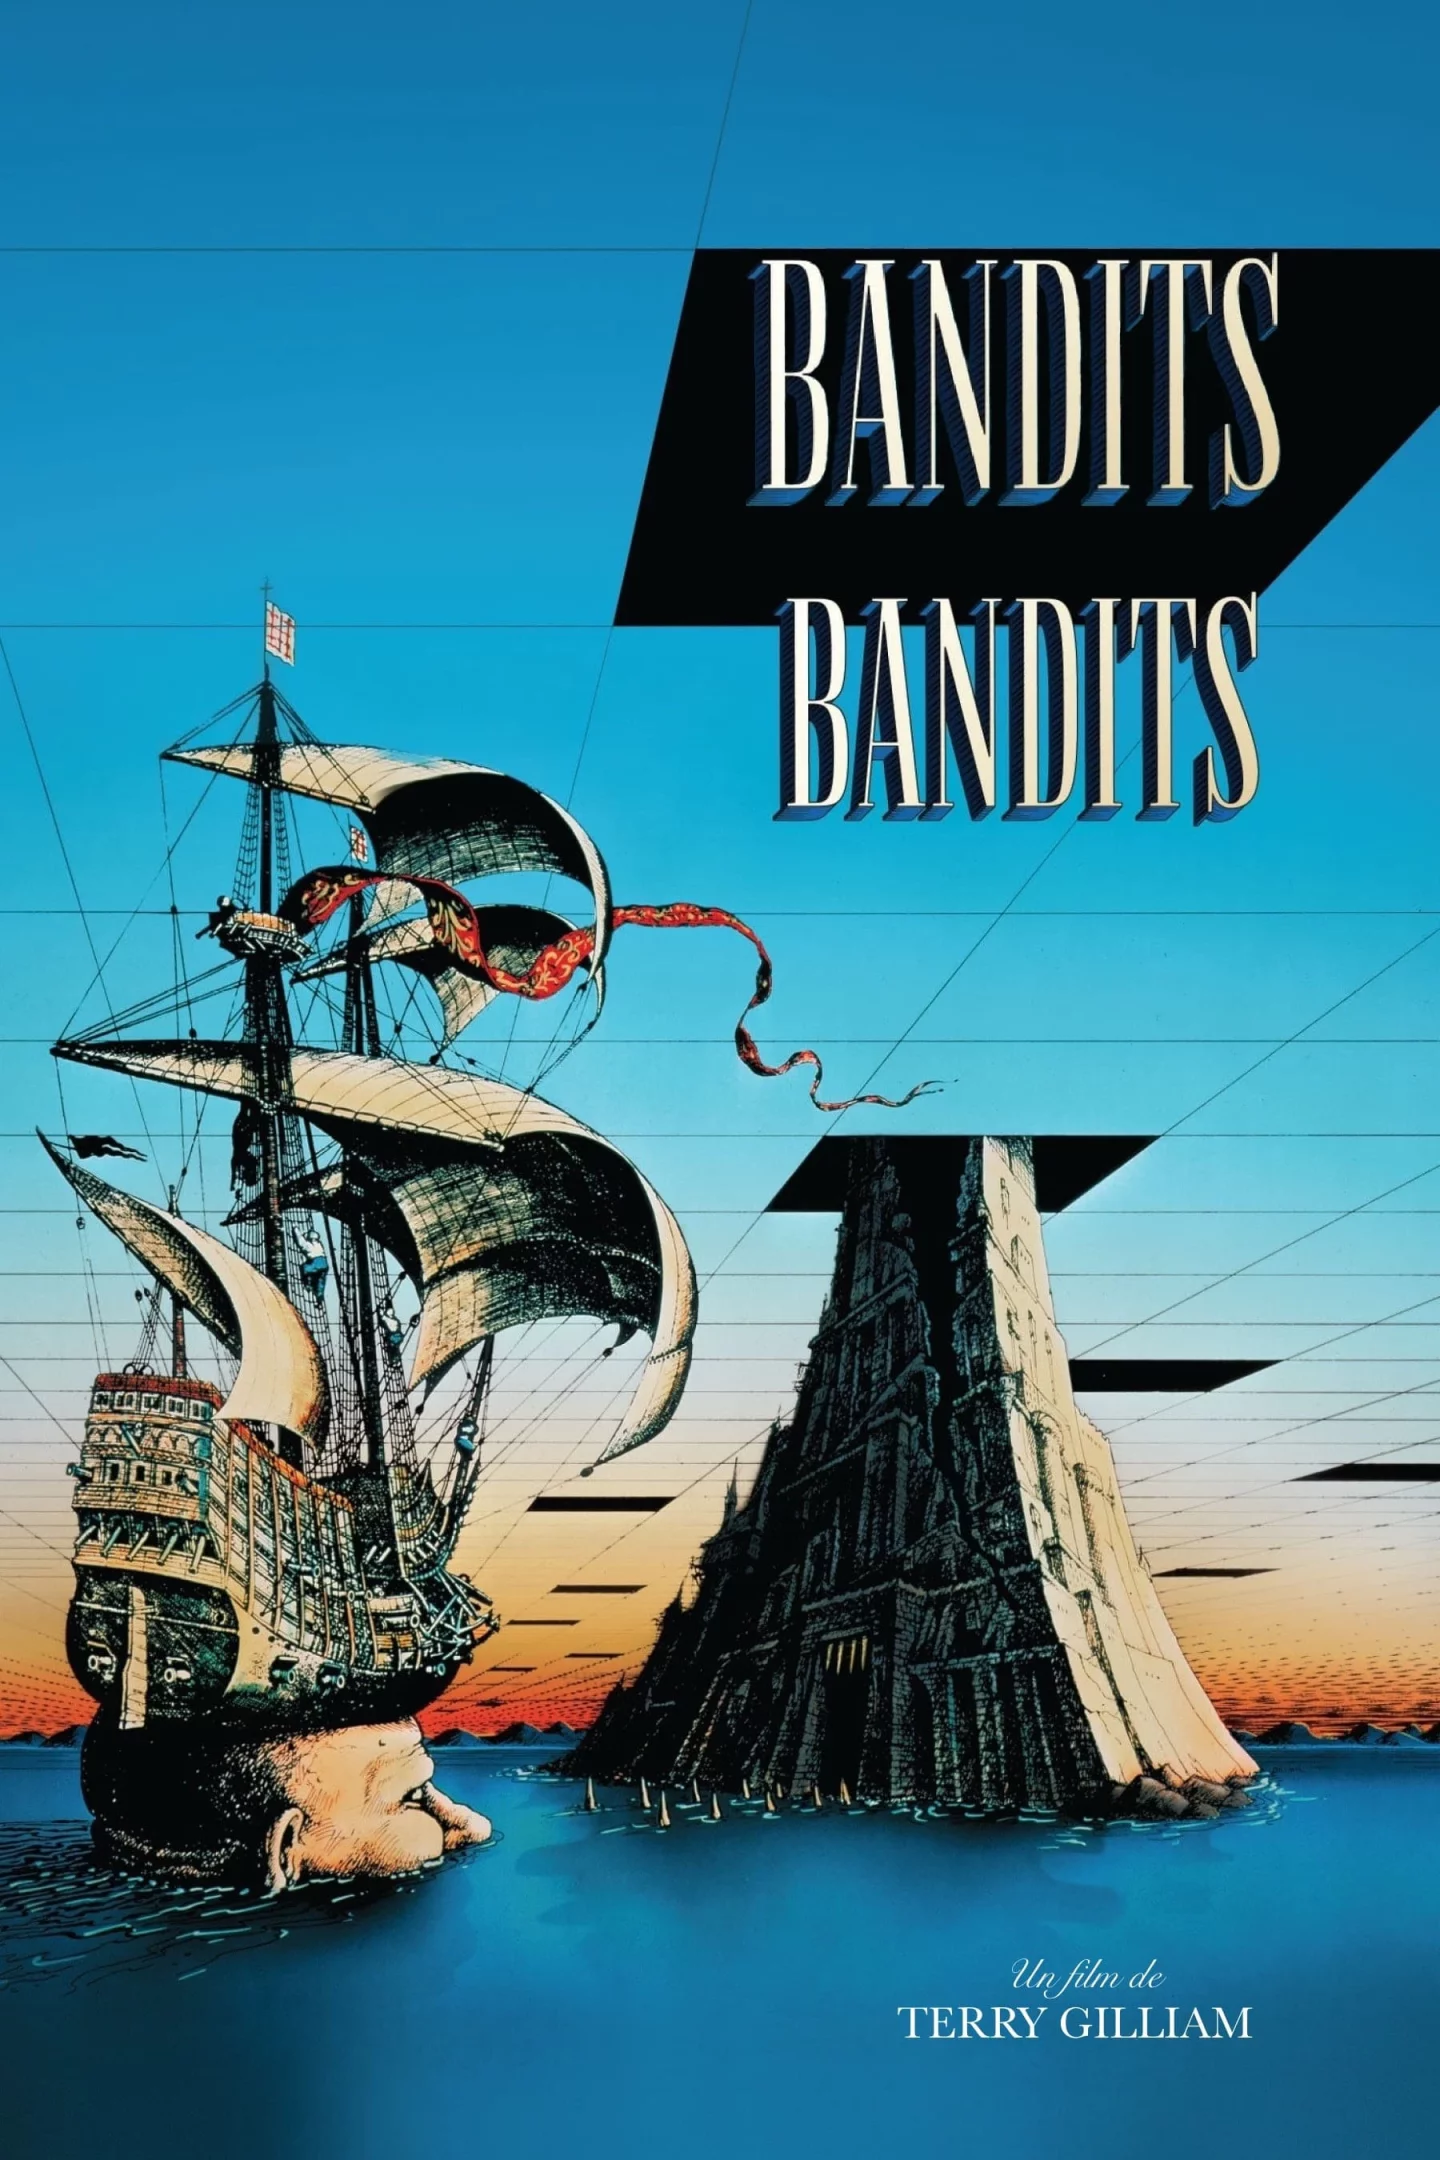 Photo du film : Bandits bandits